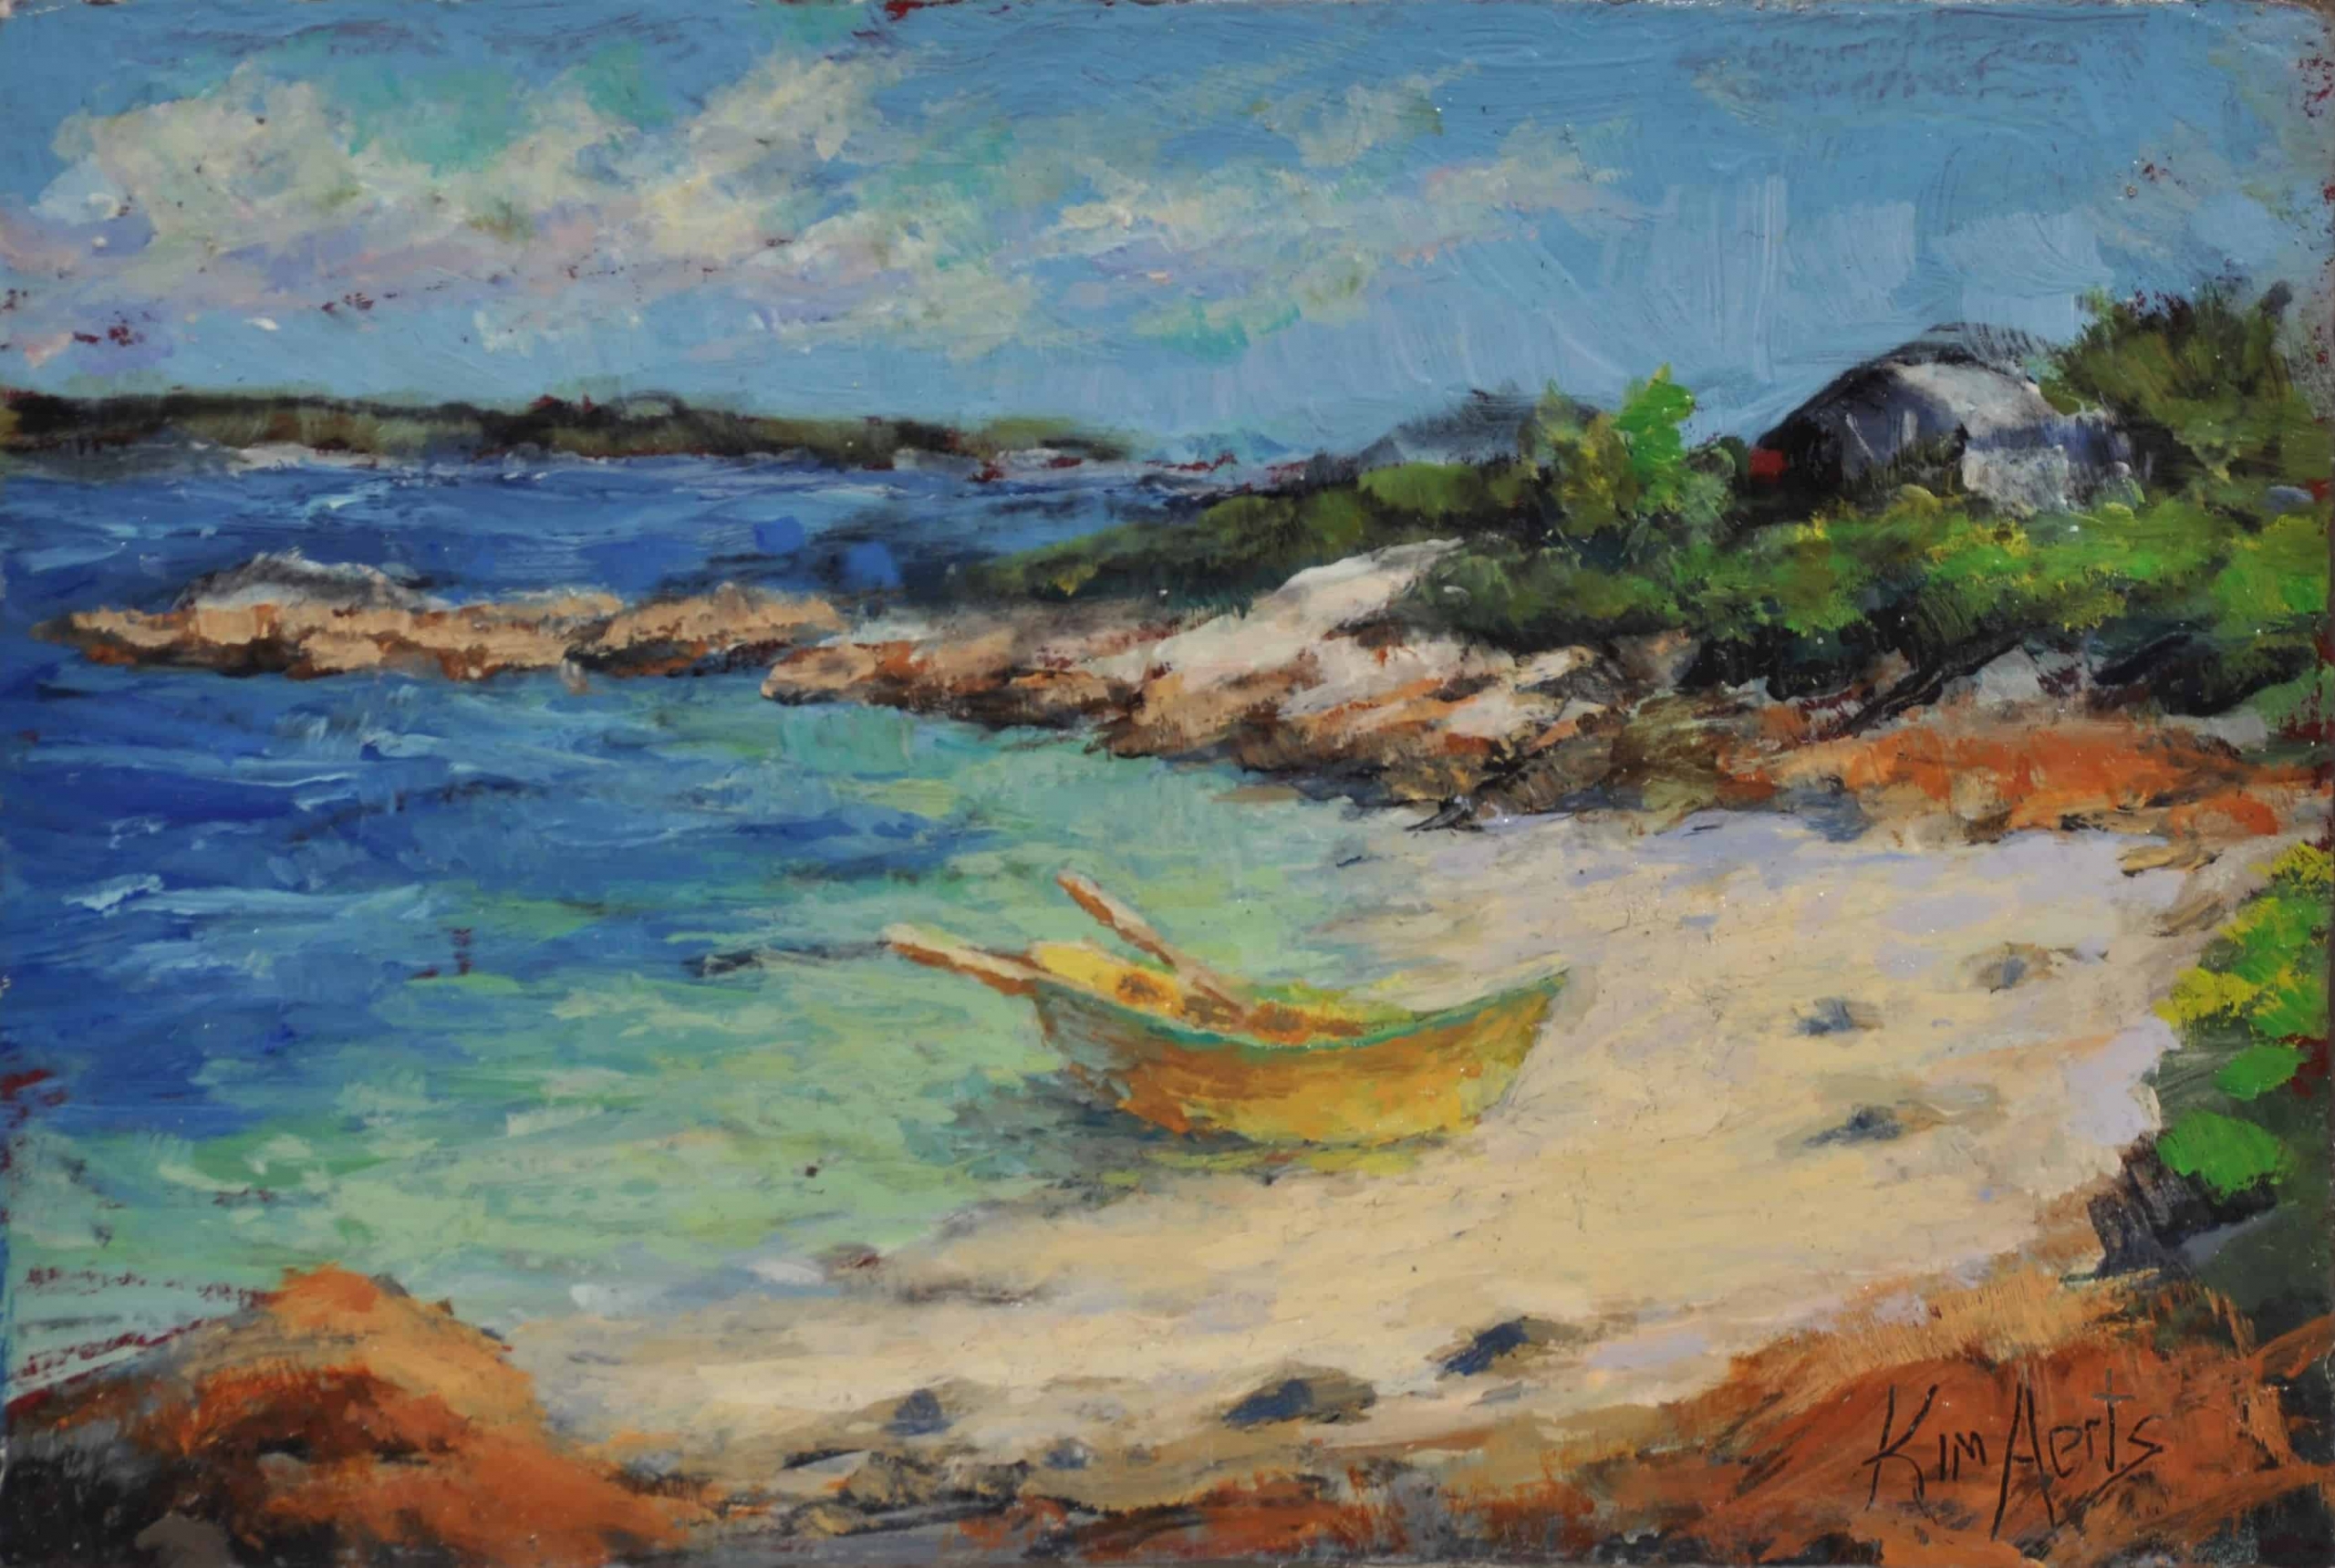 Kim Aerts oil painting - Cove Beach, Terrance Bay - 3x4 inches